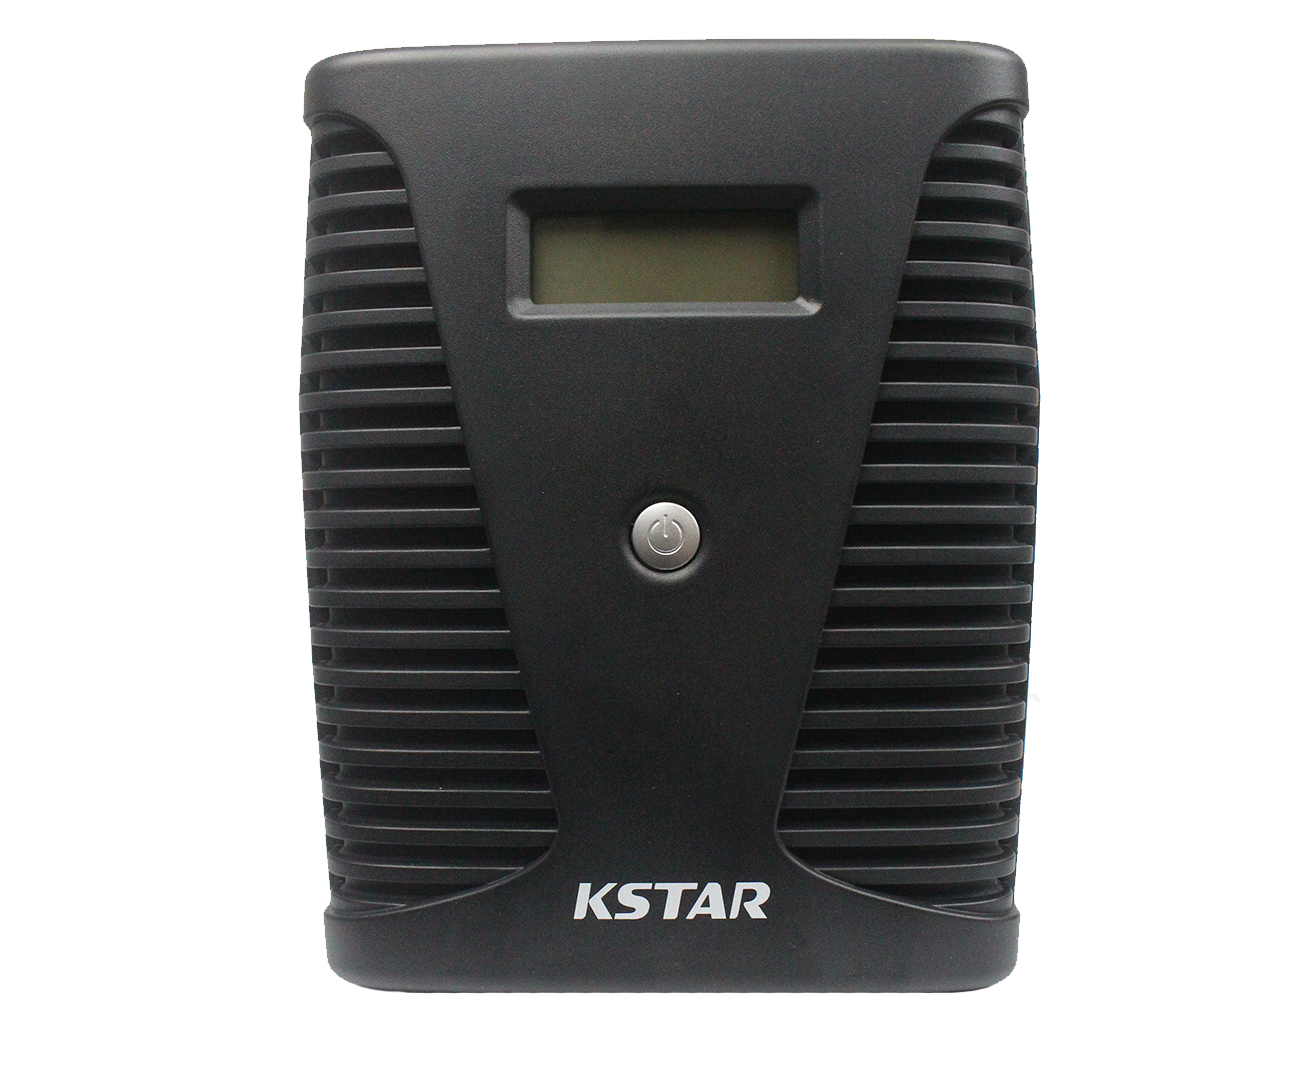 ИБП Kstar UA150 <1500VA/900W, 4 выхода, Led индикация, USB, RJ45>